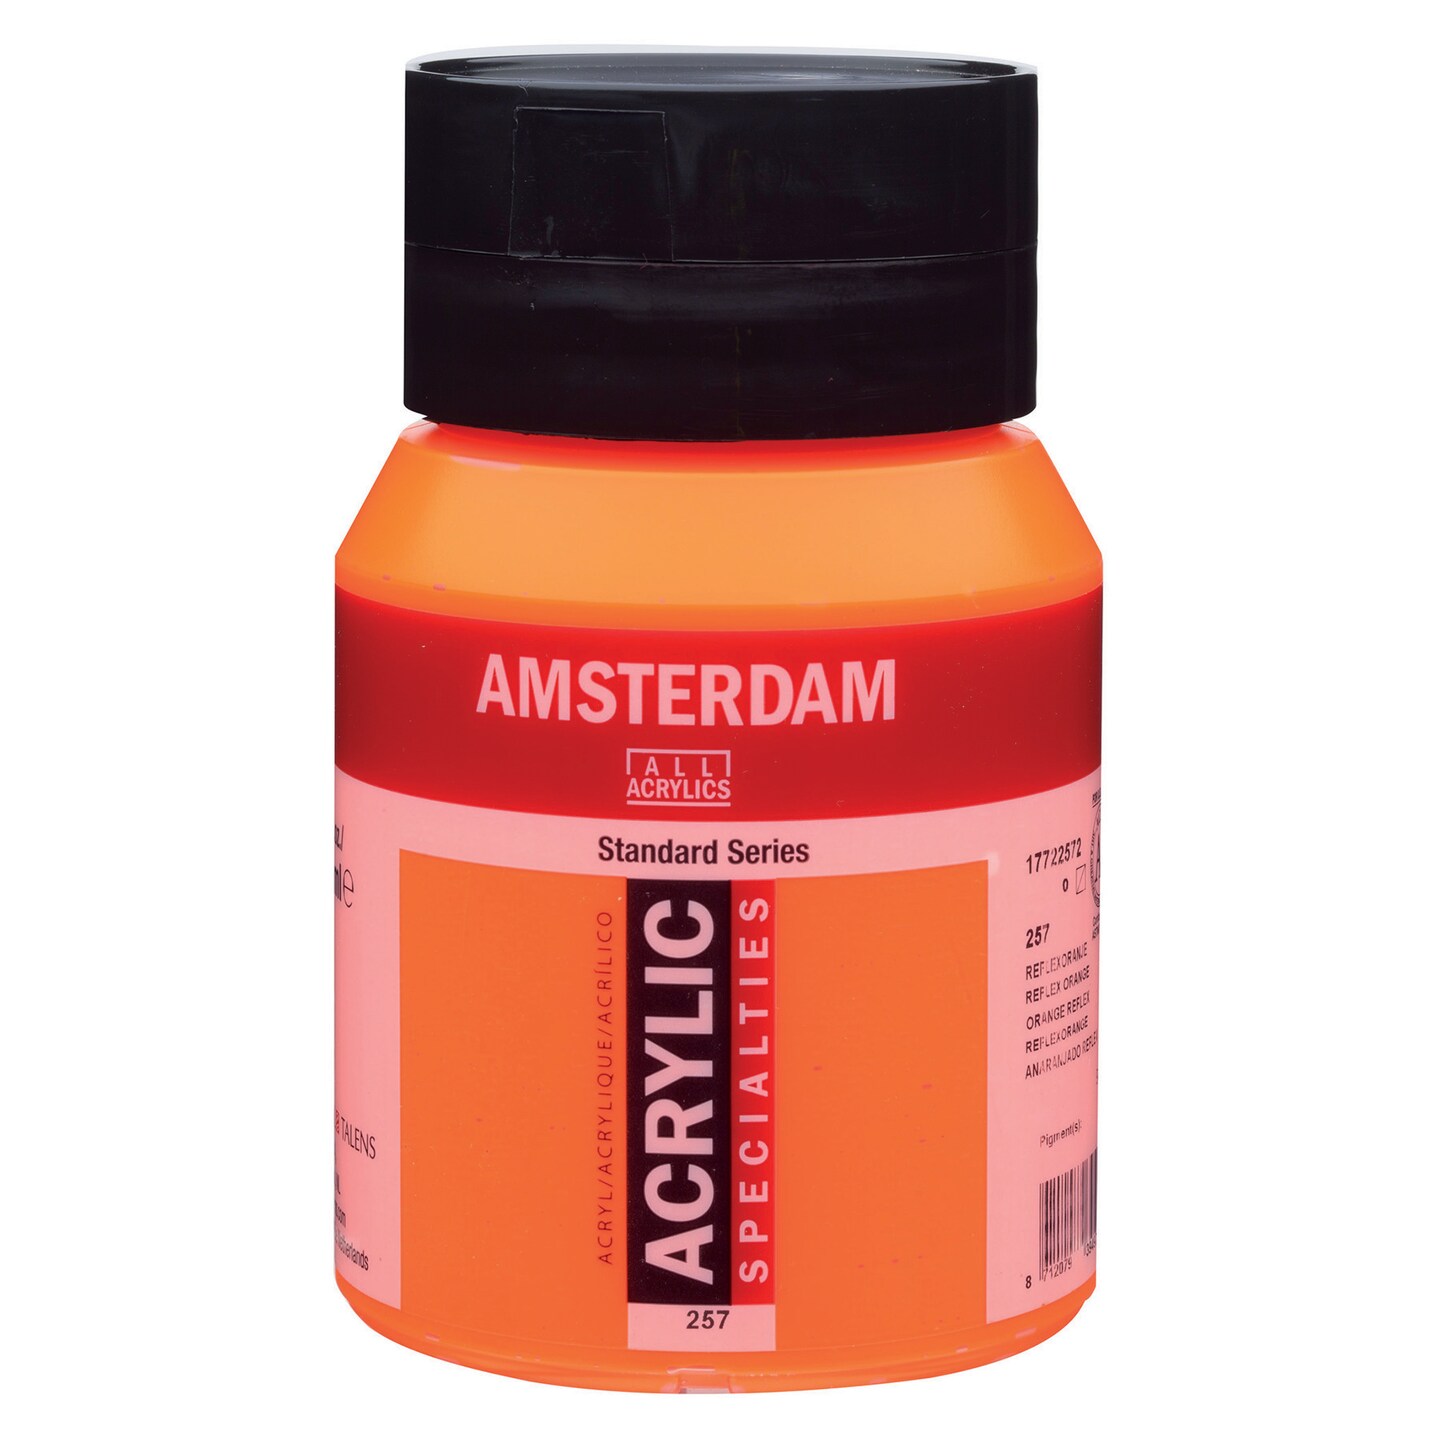 Amsterdam Standard Series Acrylic Paint, 500ml, Reflex Orange